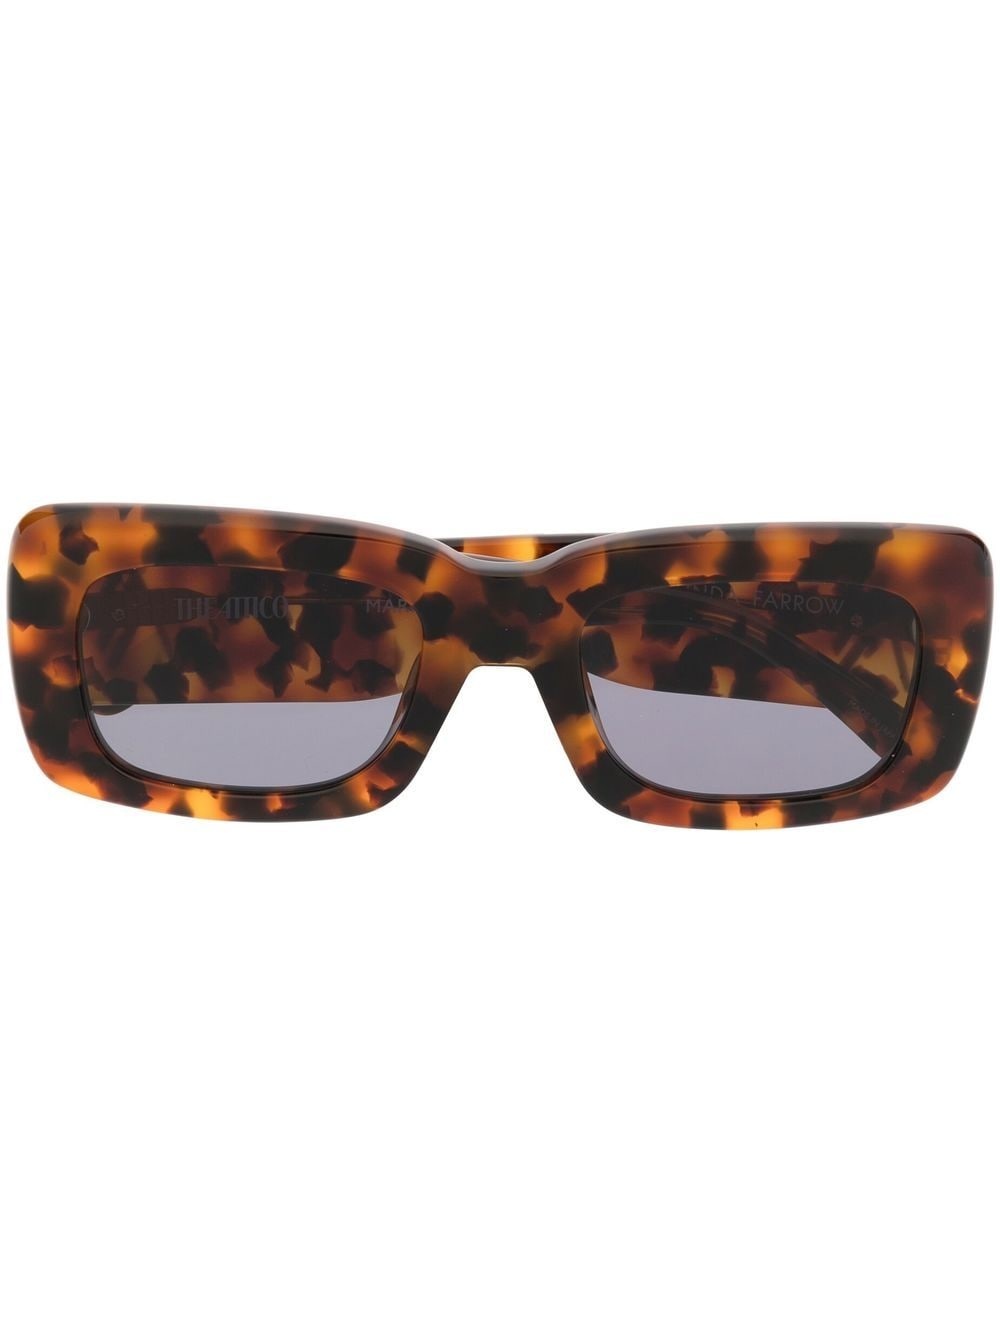 x The Attico Marfa tortoiseshell-effect sunglasses - 1